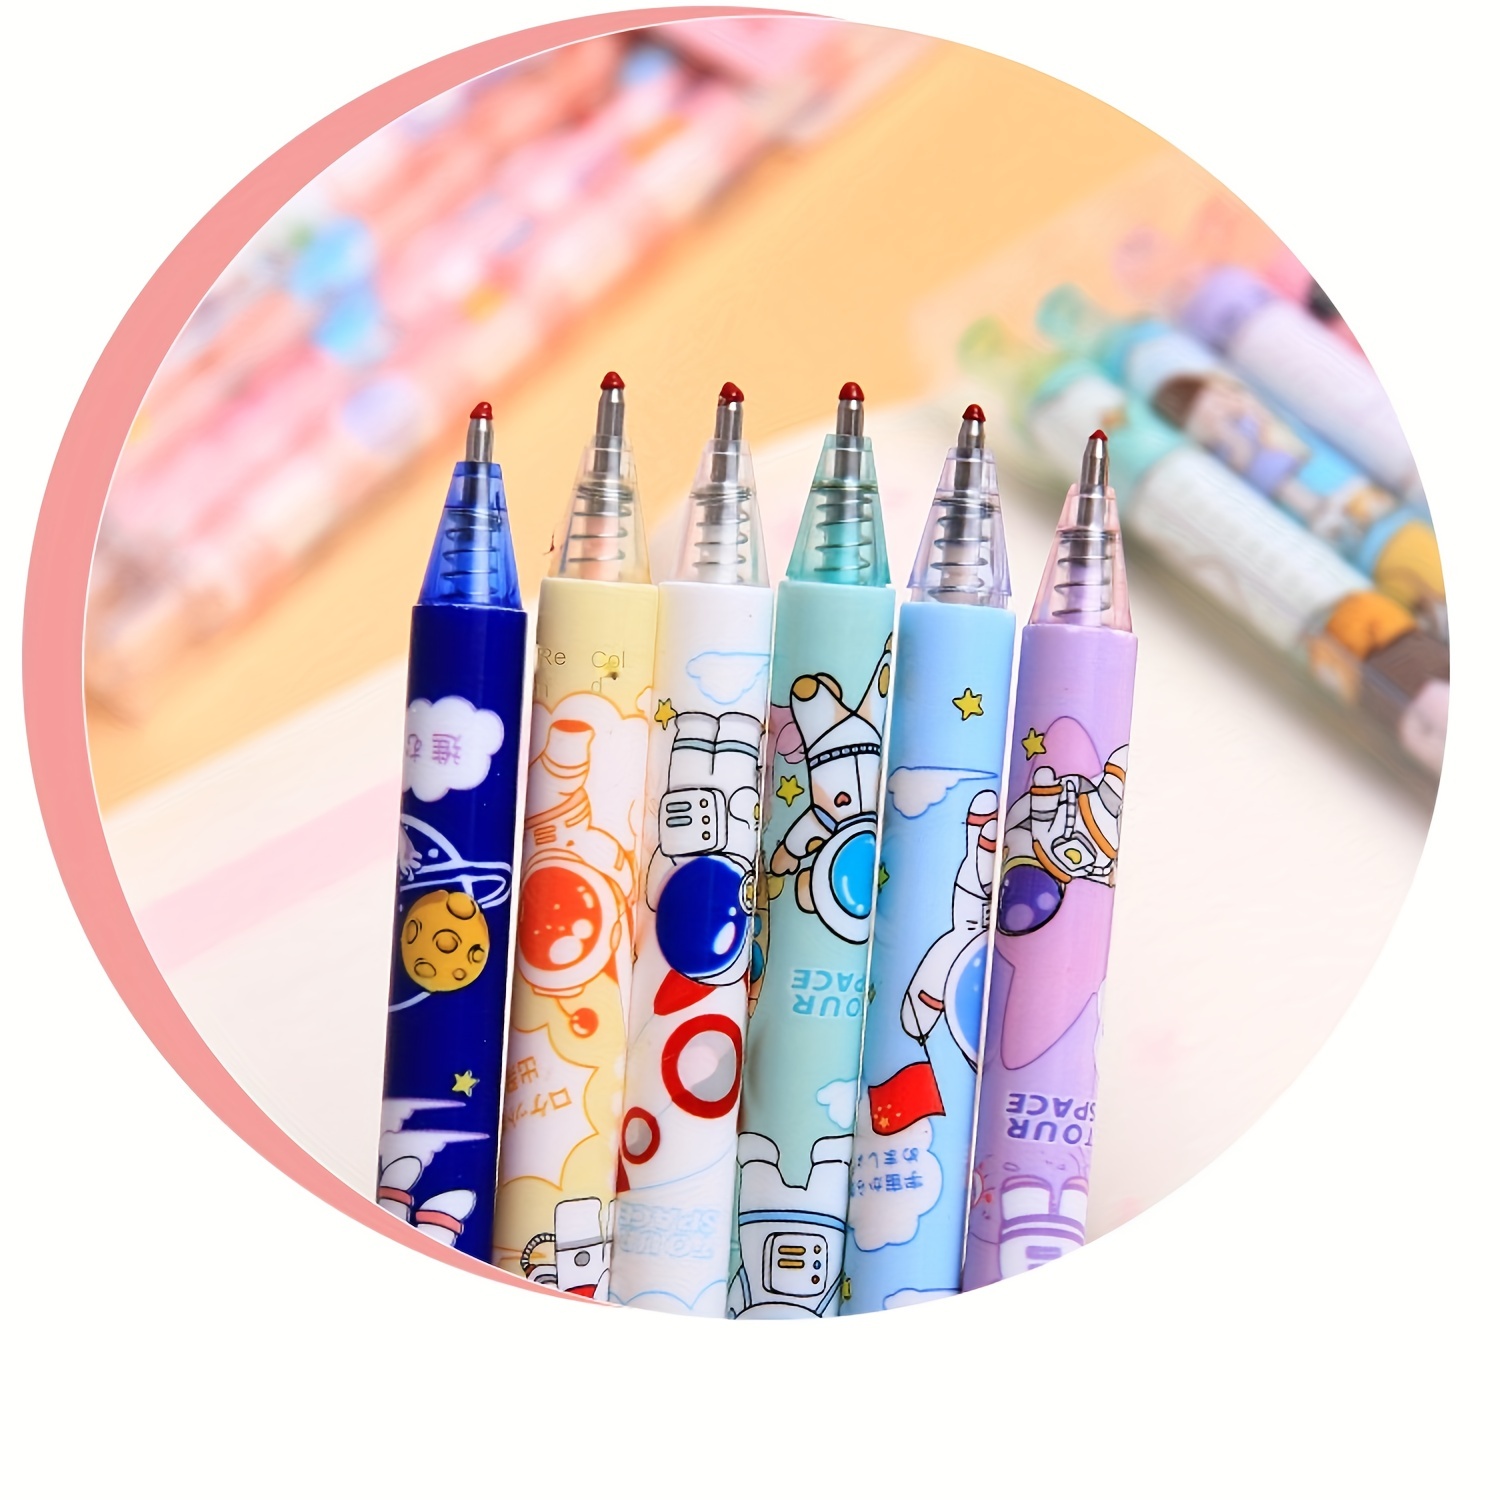 Dot Glue Pen Stick Solid Glue For School Office Supplies - Temu